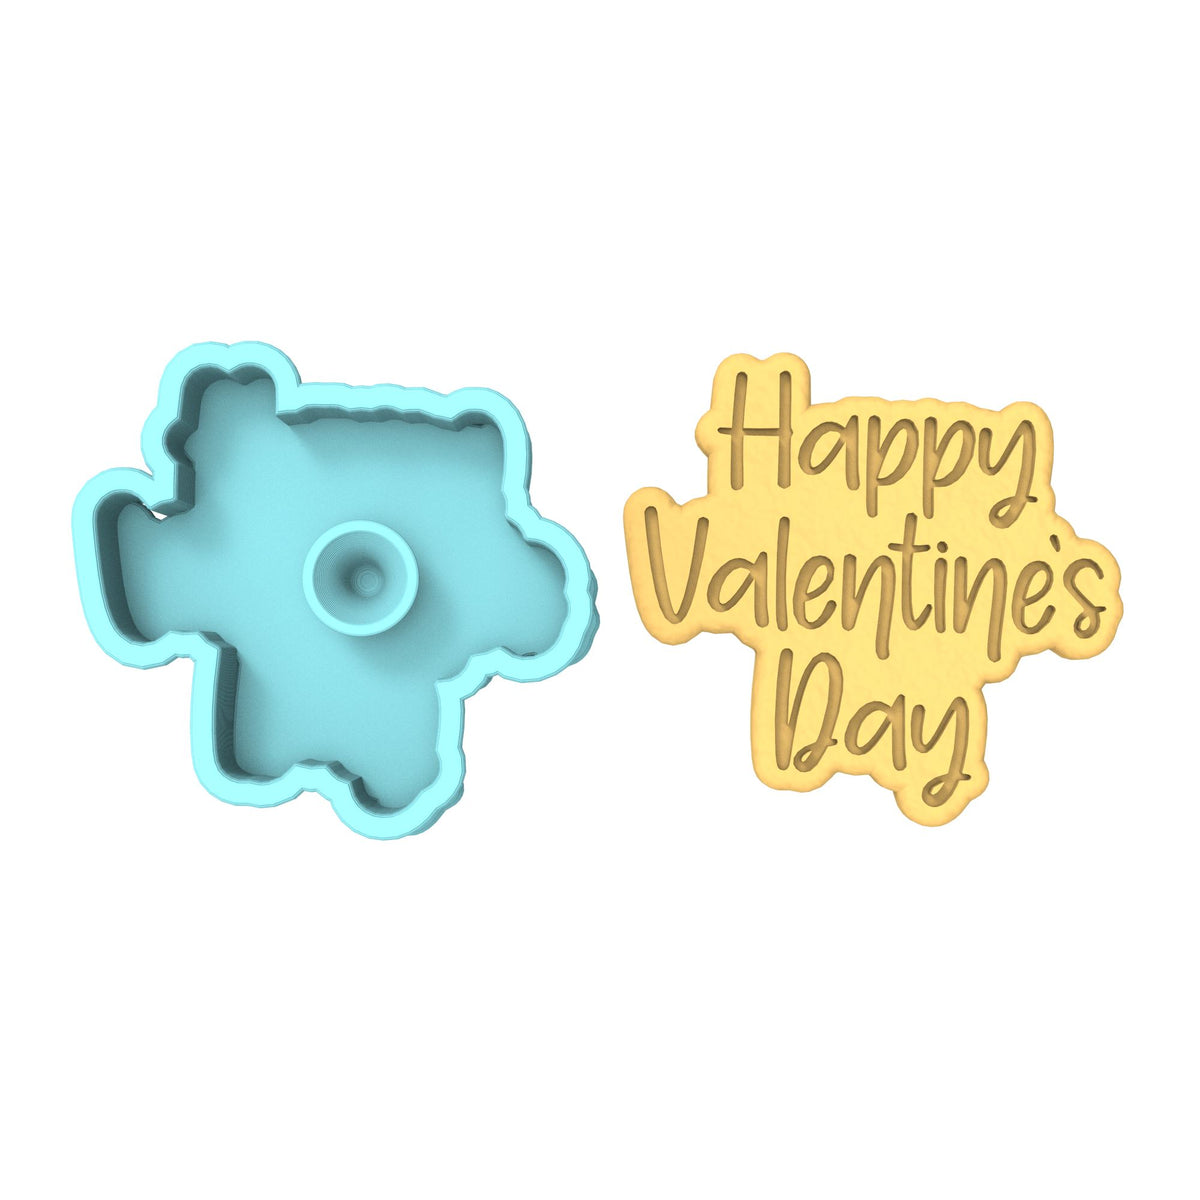 Happy Valentine's Day Heart Cookie Cutter, Stamp